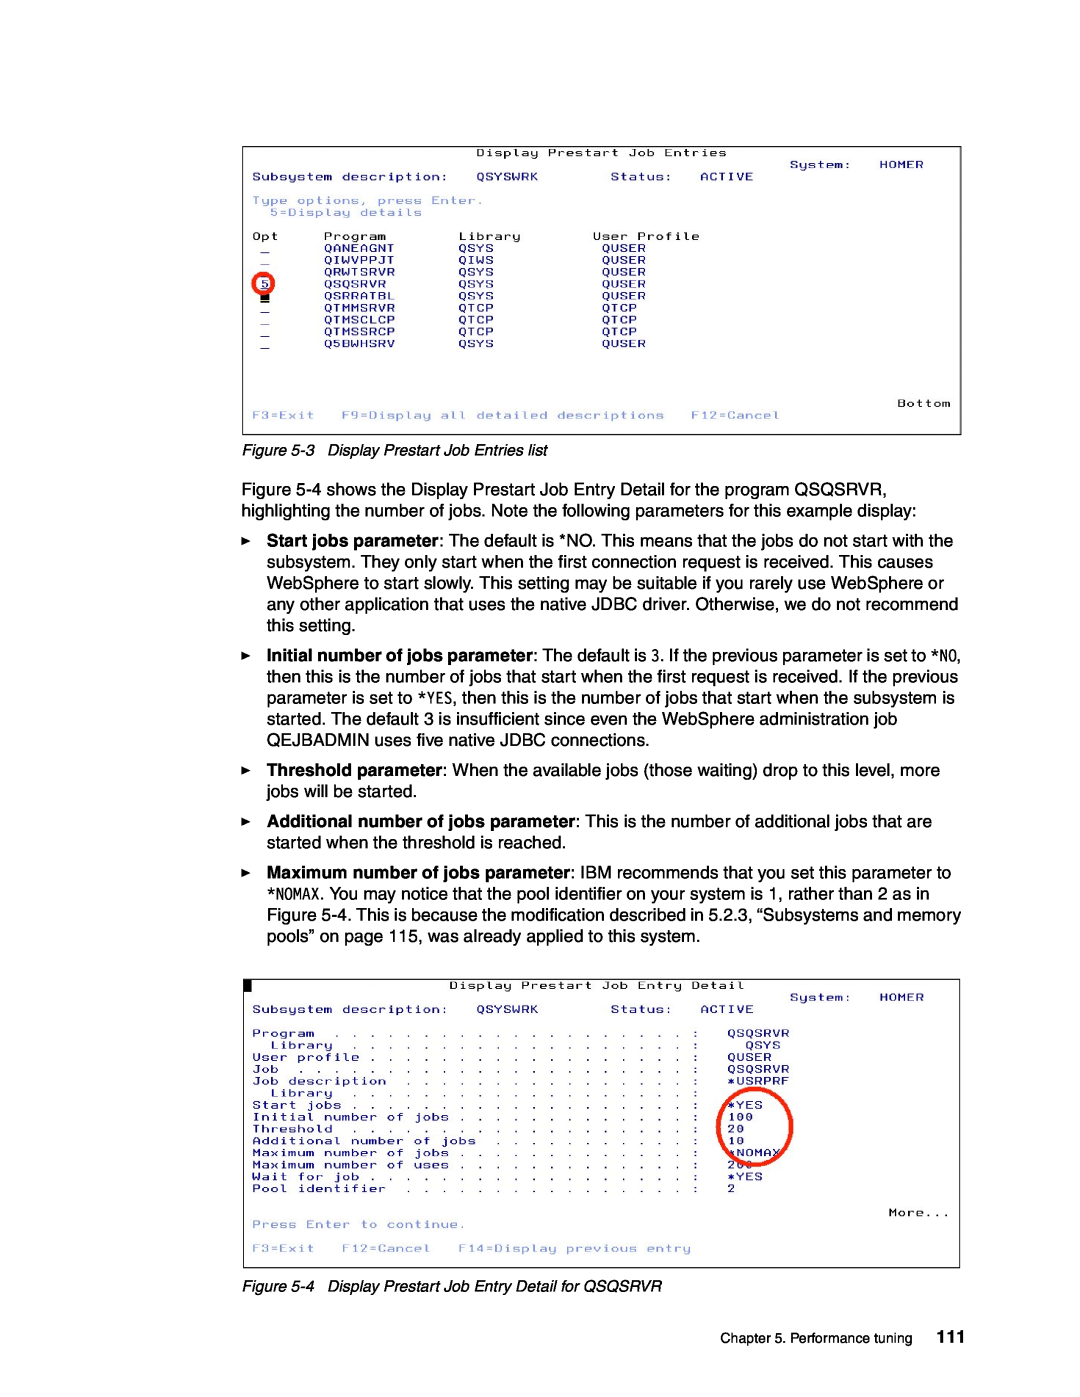 IBM SG24-6526-00 manual 3 Display Prestart Job Entries list, 4 Display Prestart Job Entry Detail for QSQSRVR 